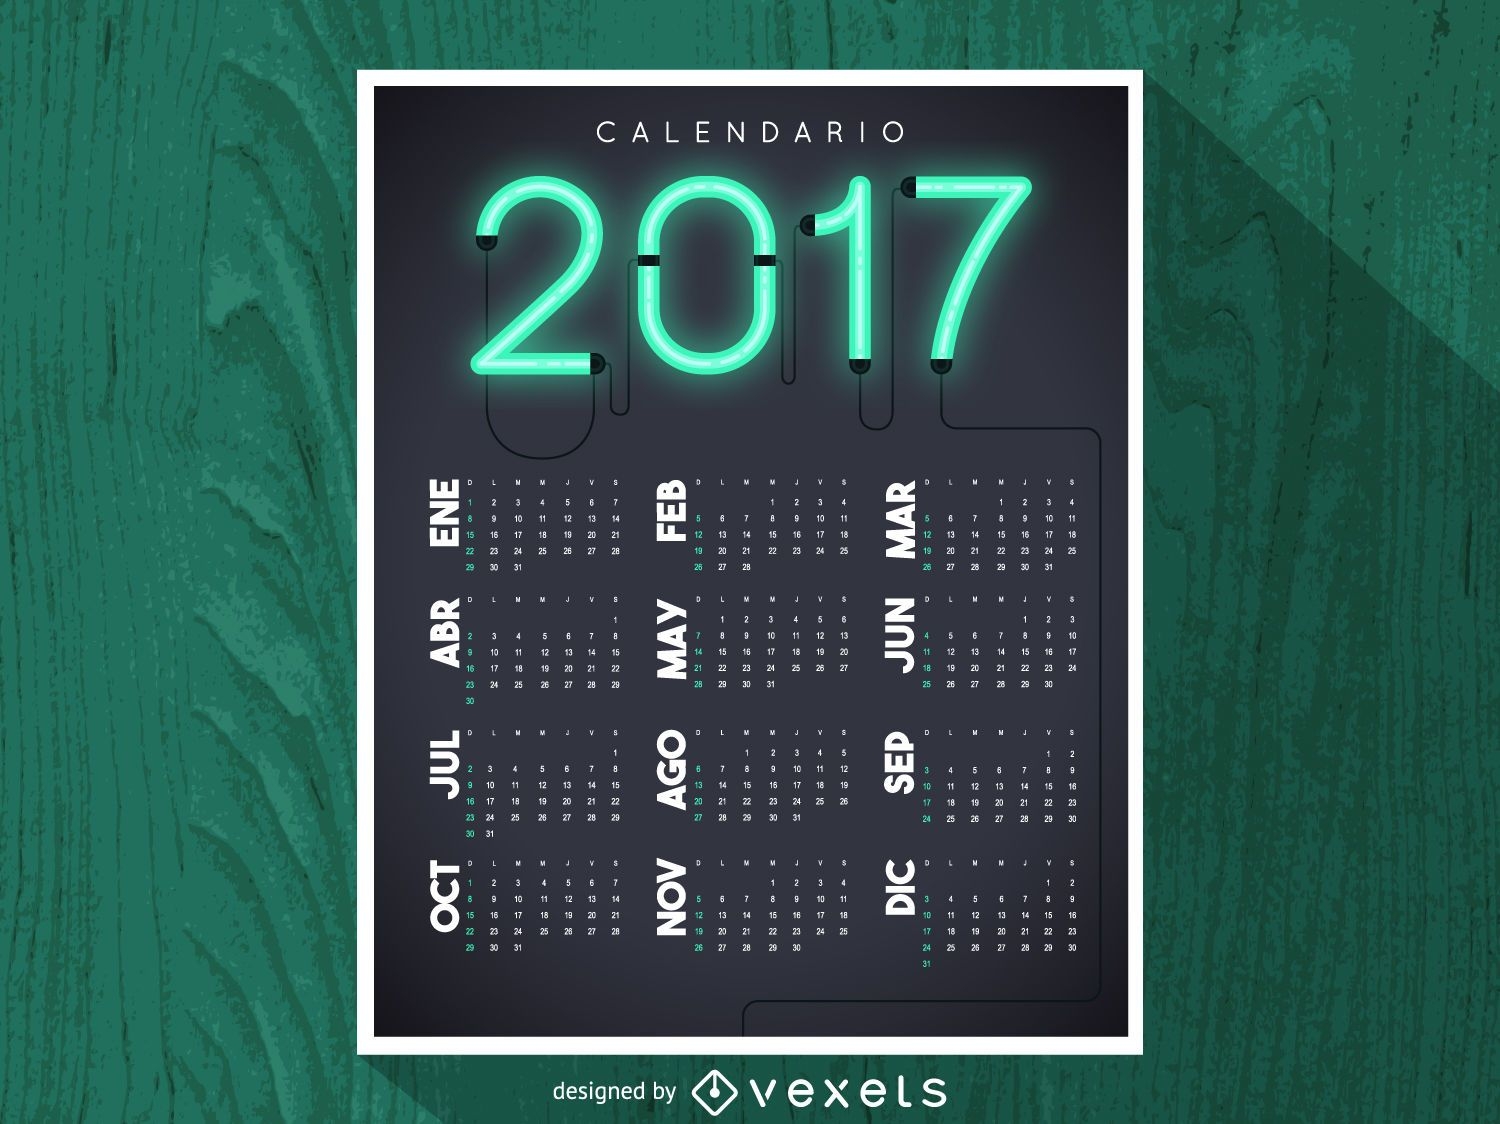 Calendario de ne?n 2017 en espa?ol